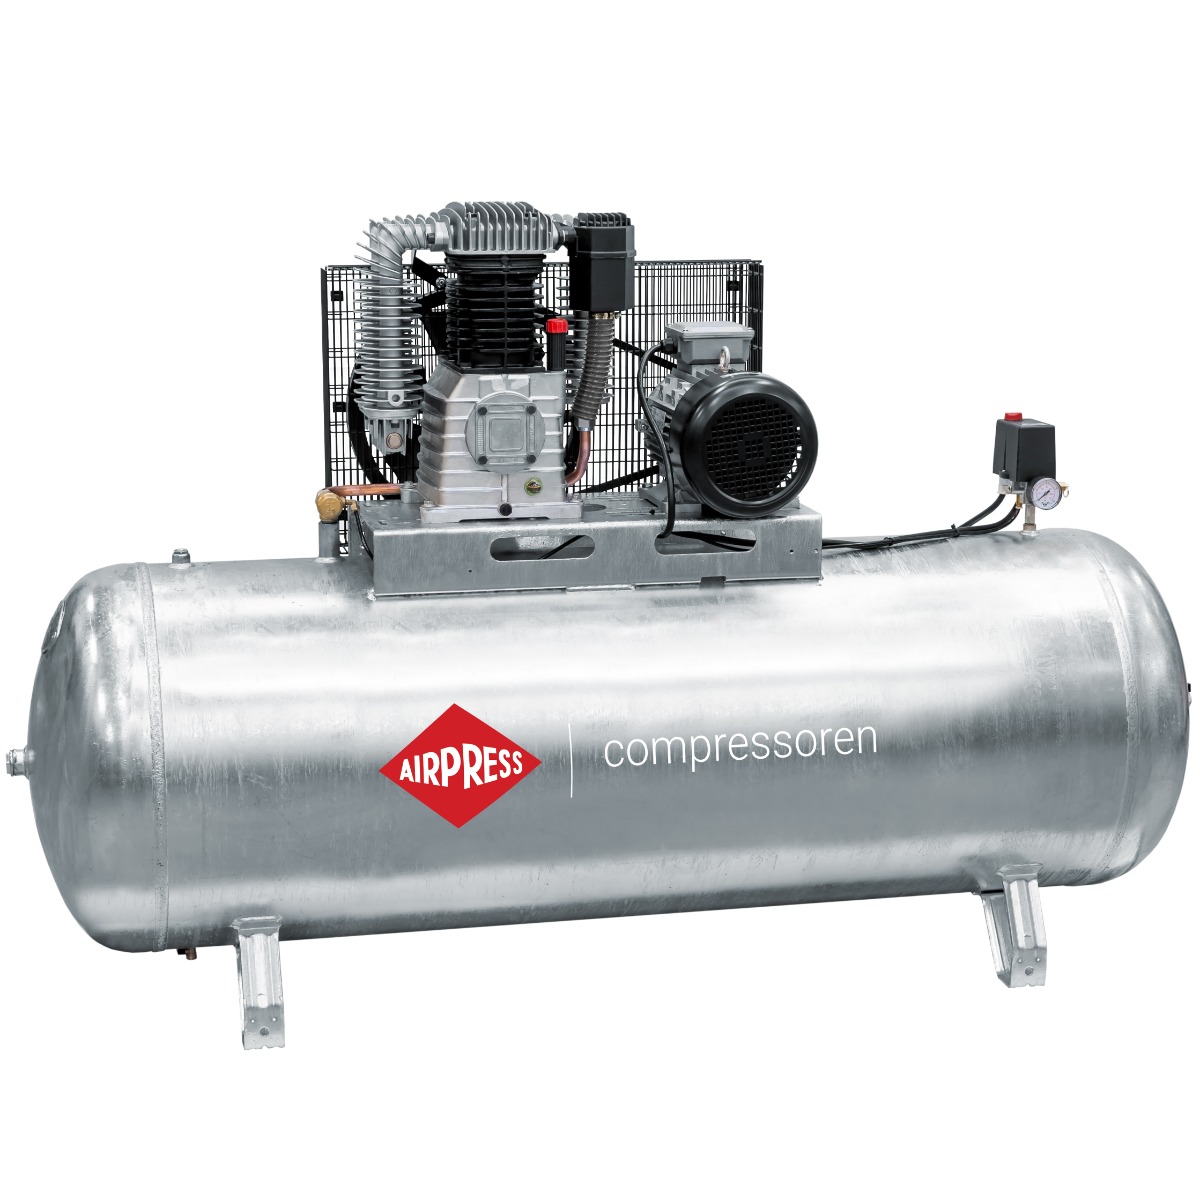 Compressor G 1000-500 11 bar 7.5 pk 698 l/min 500 l verzinkt